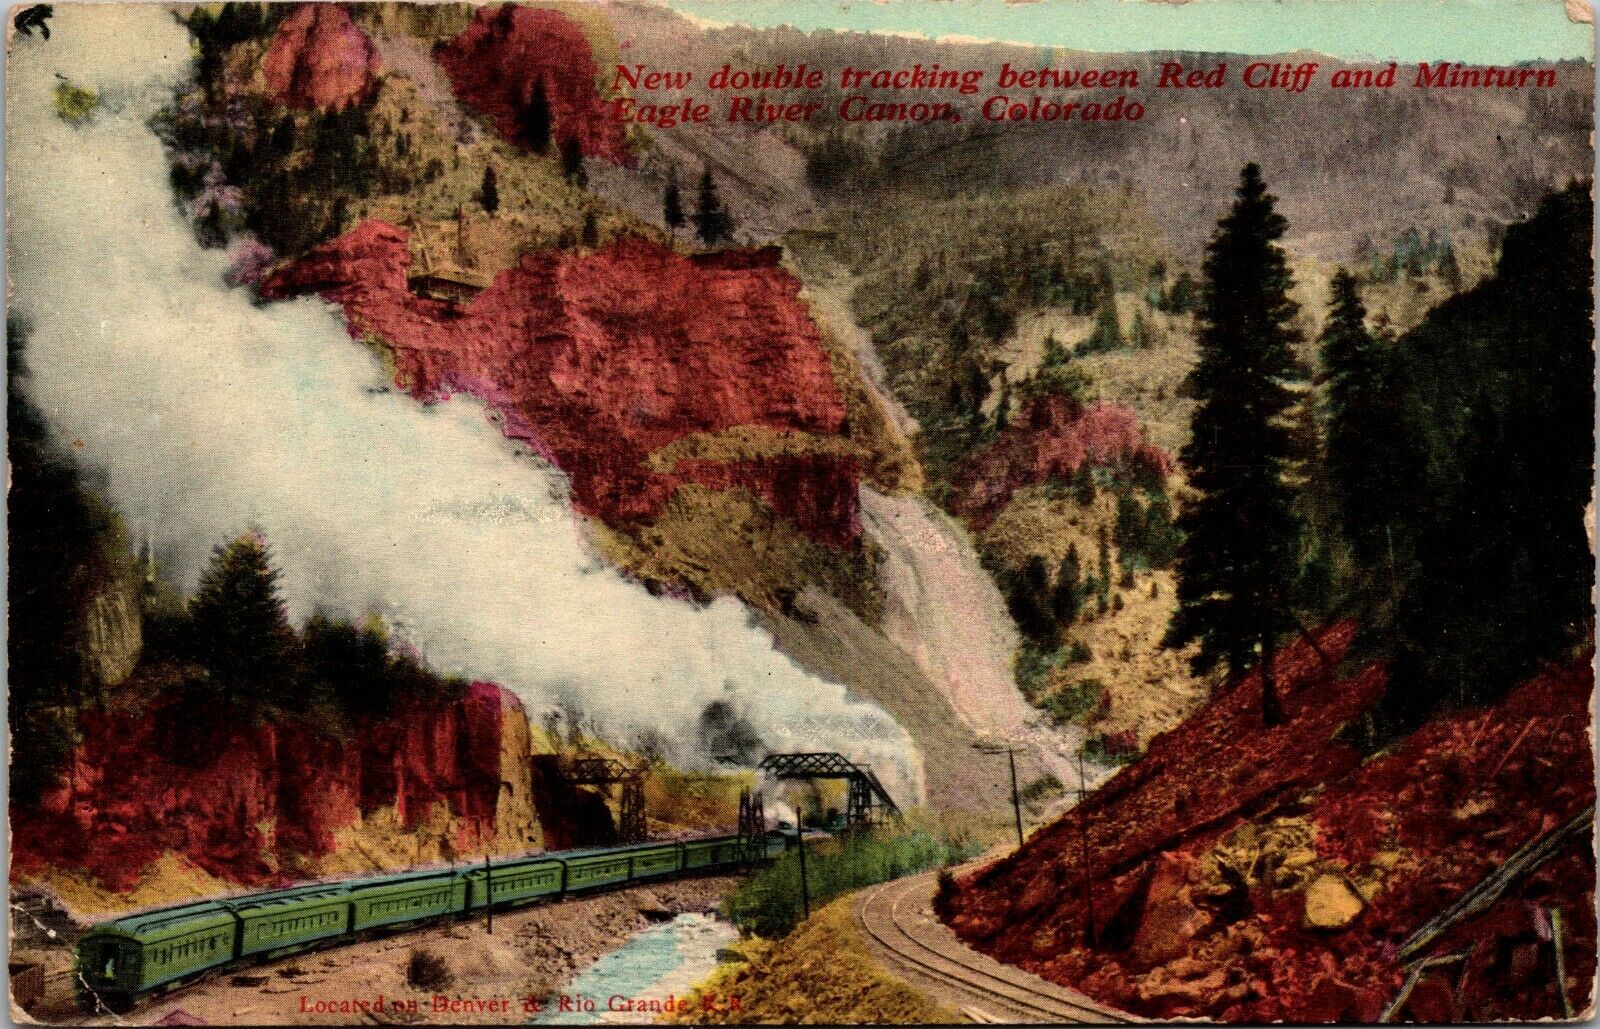 Vtg 1910s Double Track Railroad Train Eagle River Canyon Colorado CO Postcard